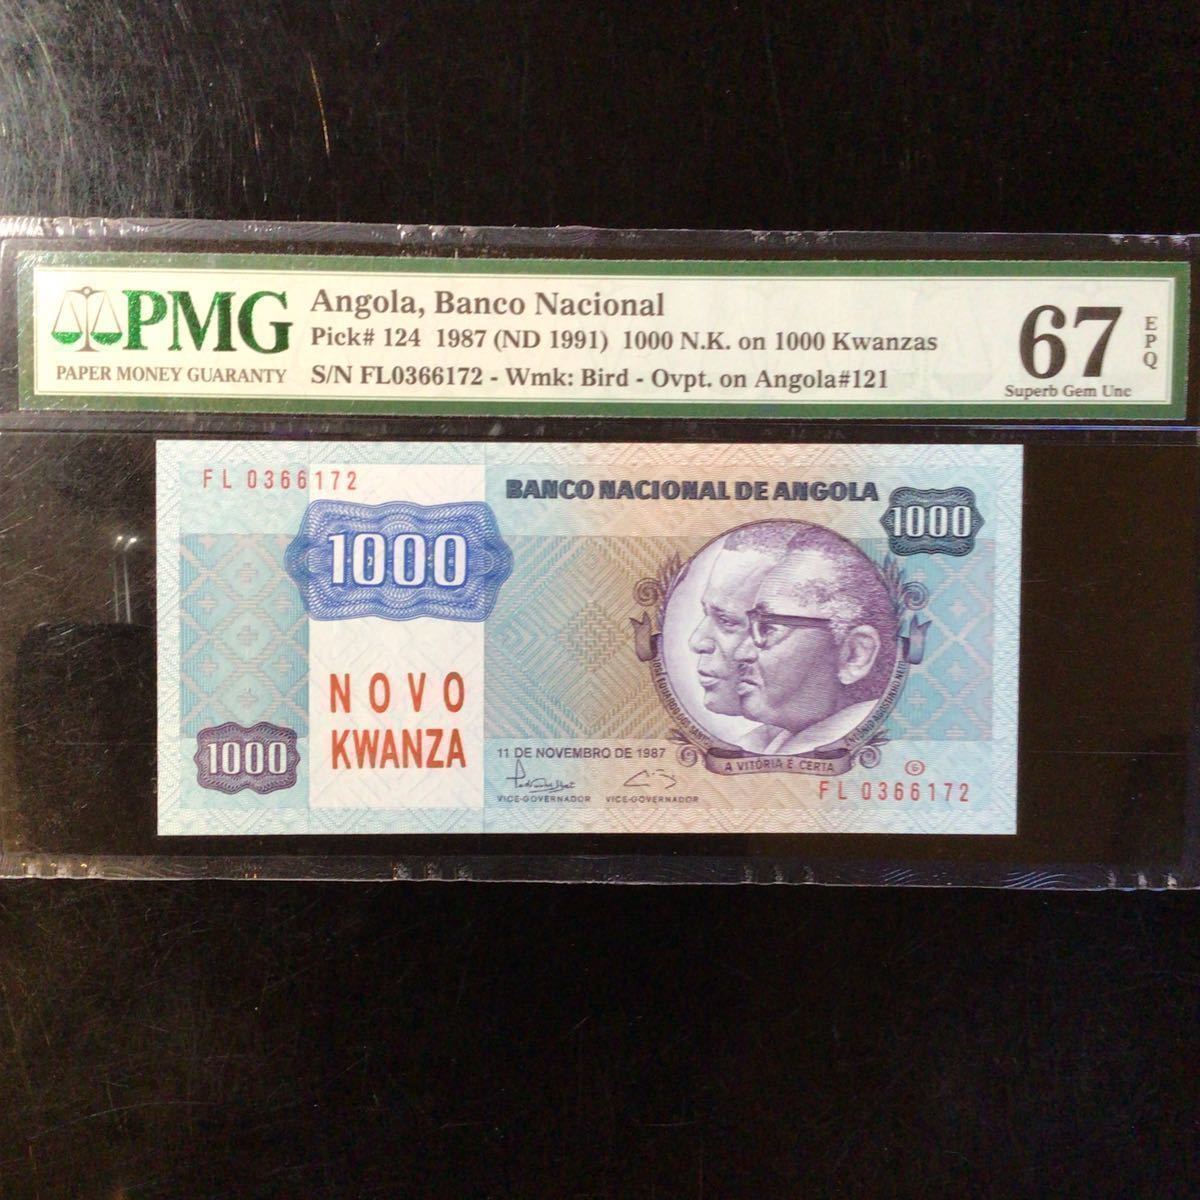 World Banknote Grading ANGOLA《Banco Nacional》1000 Novo Kwanza on 1000 Kwanzas【1987】『PMG Grading Superb Gem Unc 67 EPQ』